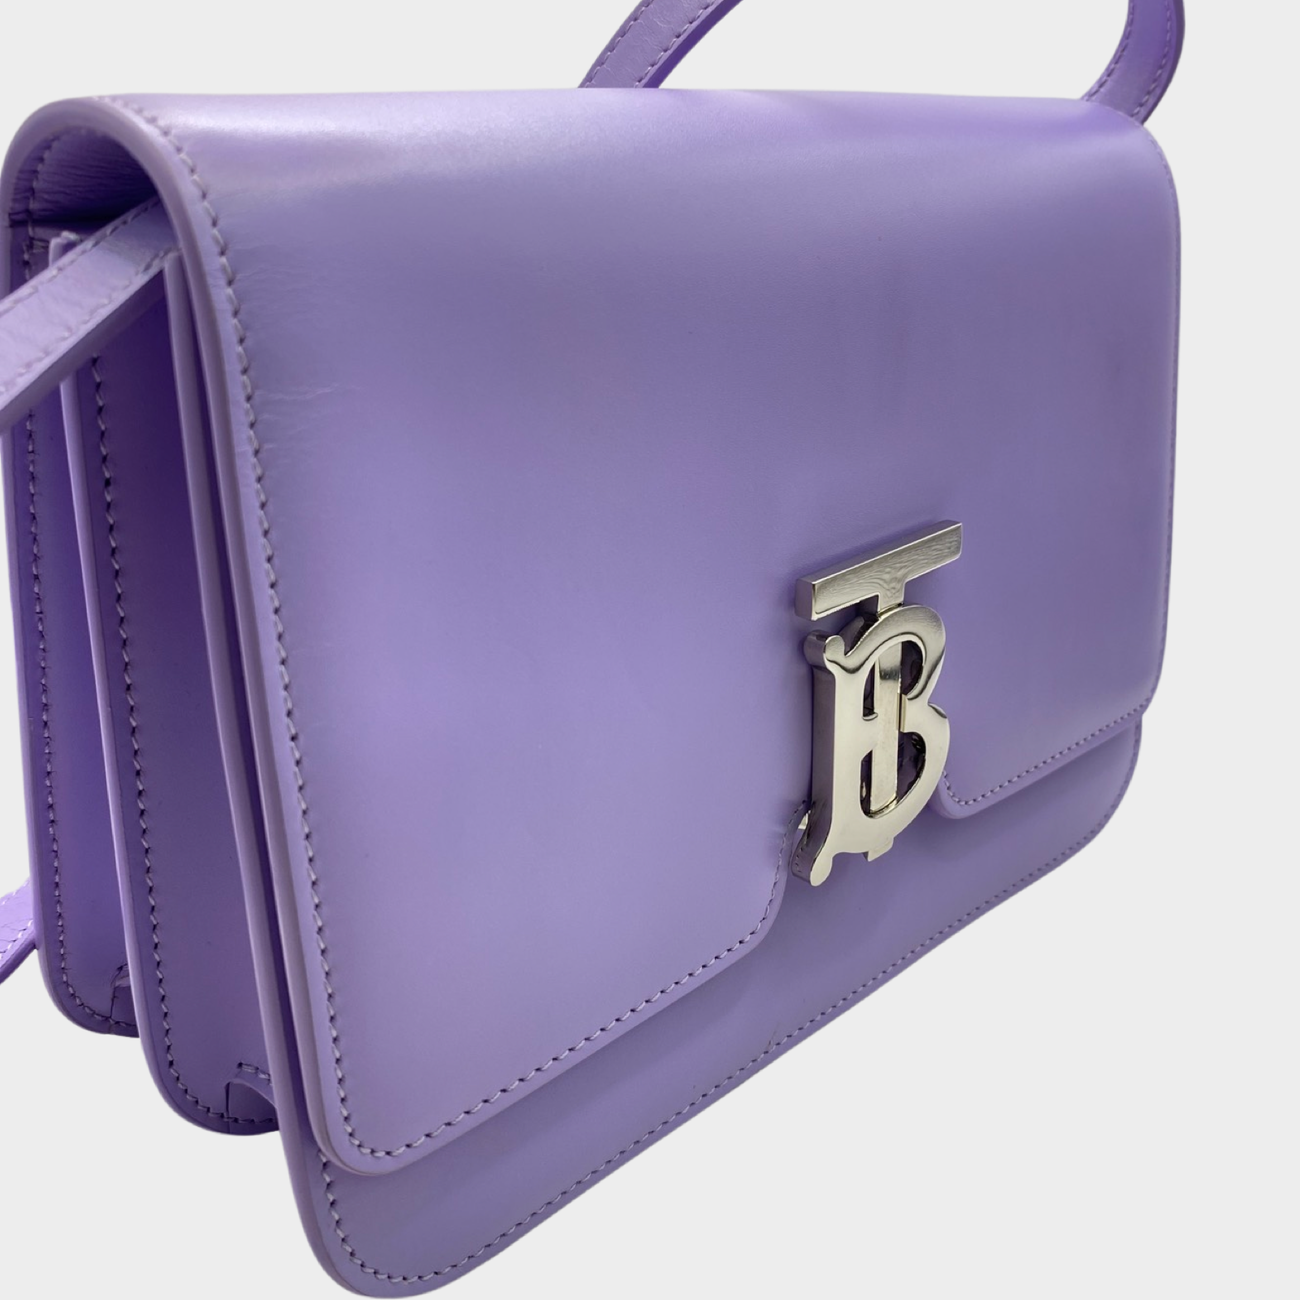 $1750 Burberry Medium TB Grain Leather Shoulder Bag | eBay